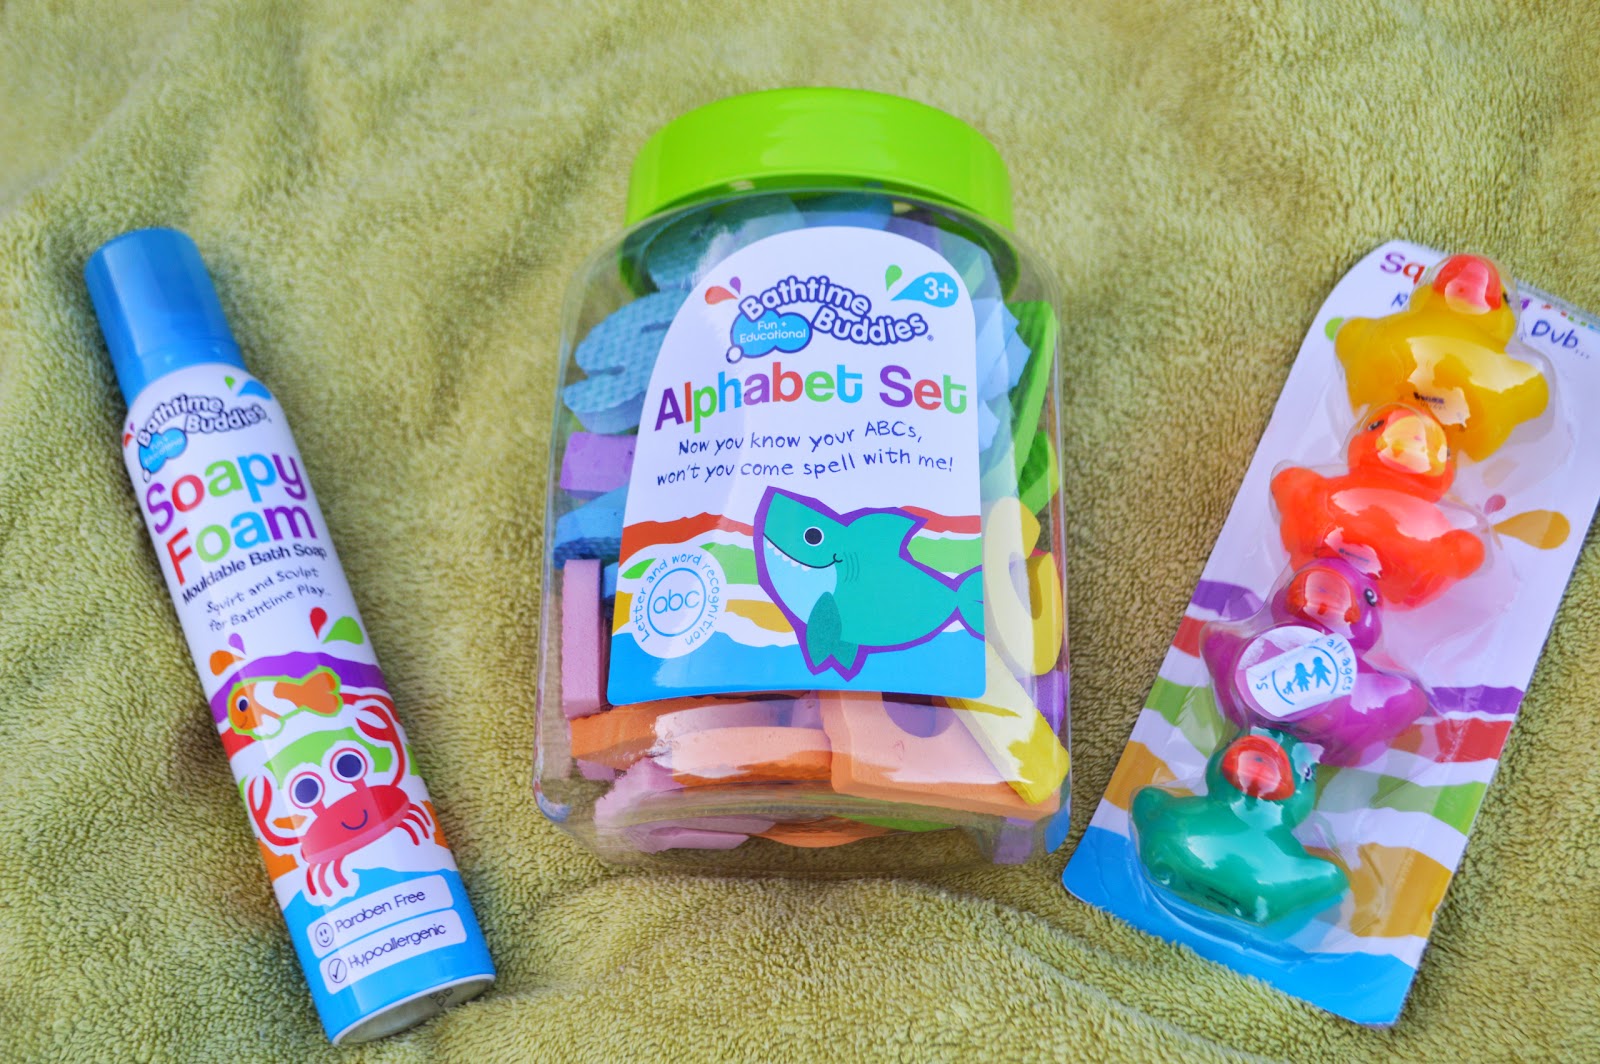 , Bathtime Buddies Fun Bath Toys Review and Alphabet Set Giveaway